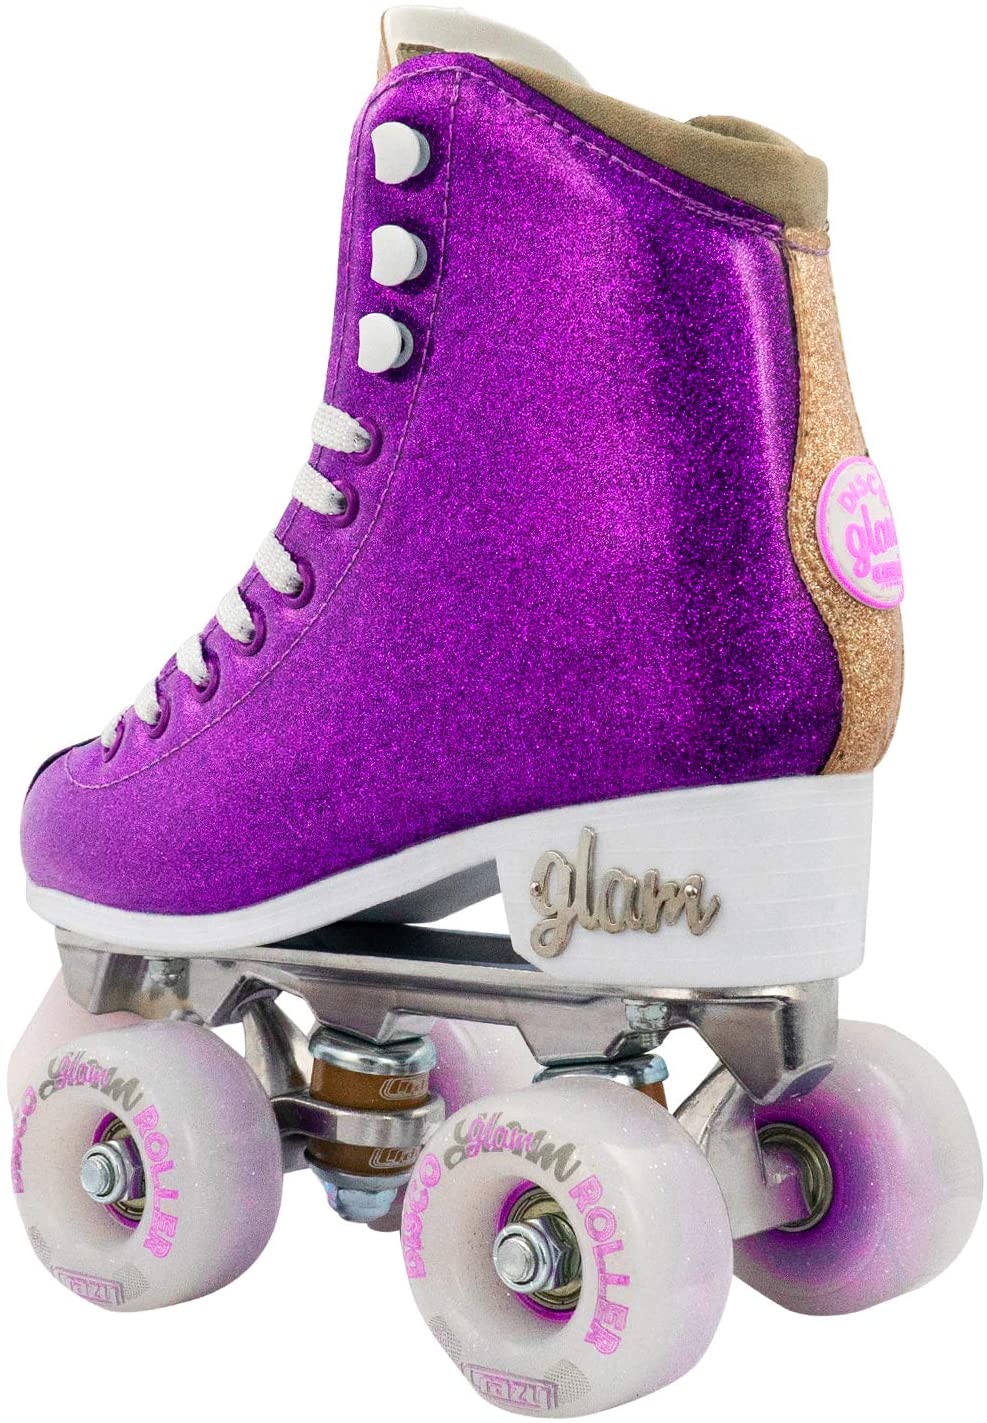 CRAZY Skates Disco Glam Teal and Pink Glitter Roller Skates Women's Size 5 